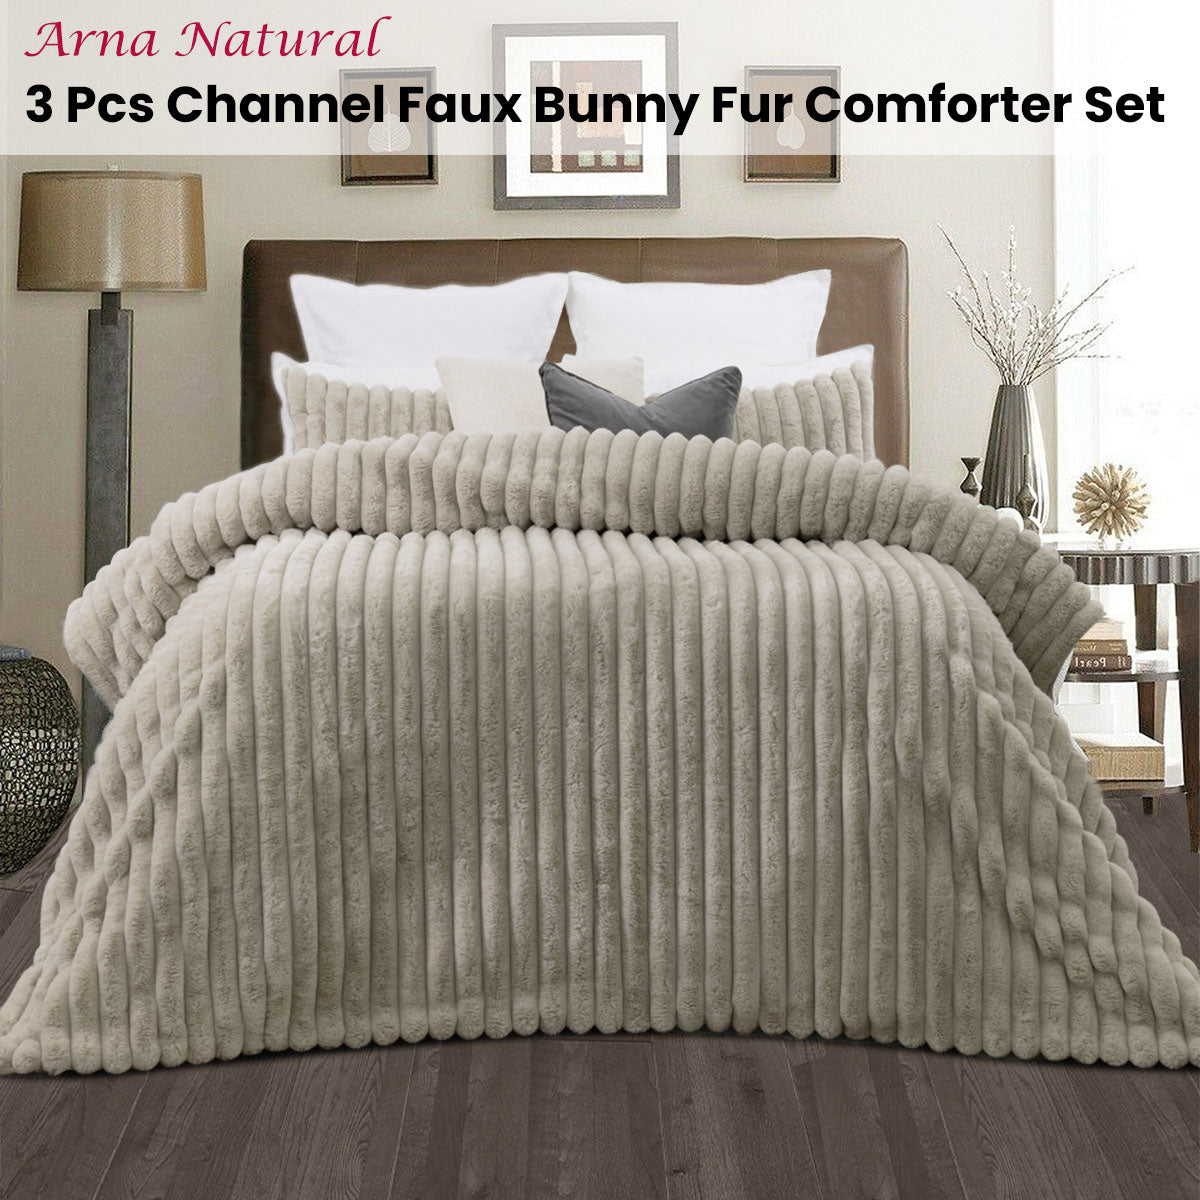 Queen Jane Barrington Arna Natural 3 Pcs Channel Faux Bunny Fur Comforter Set